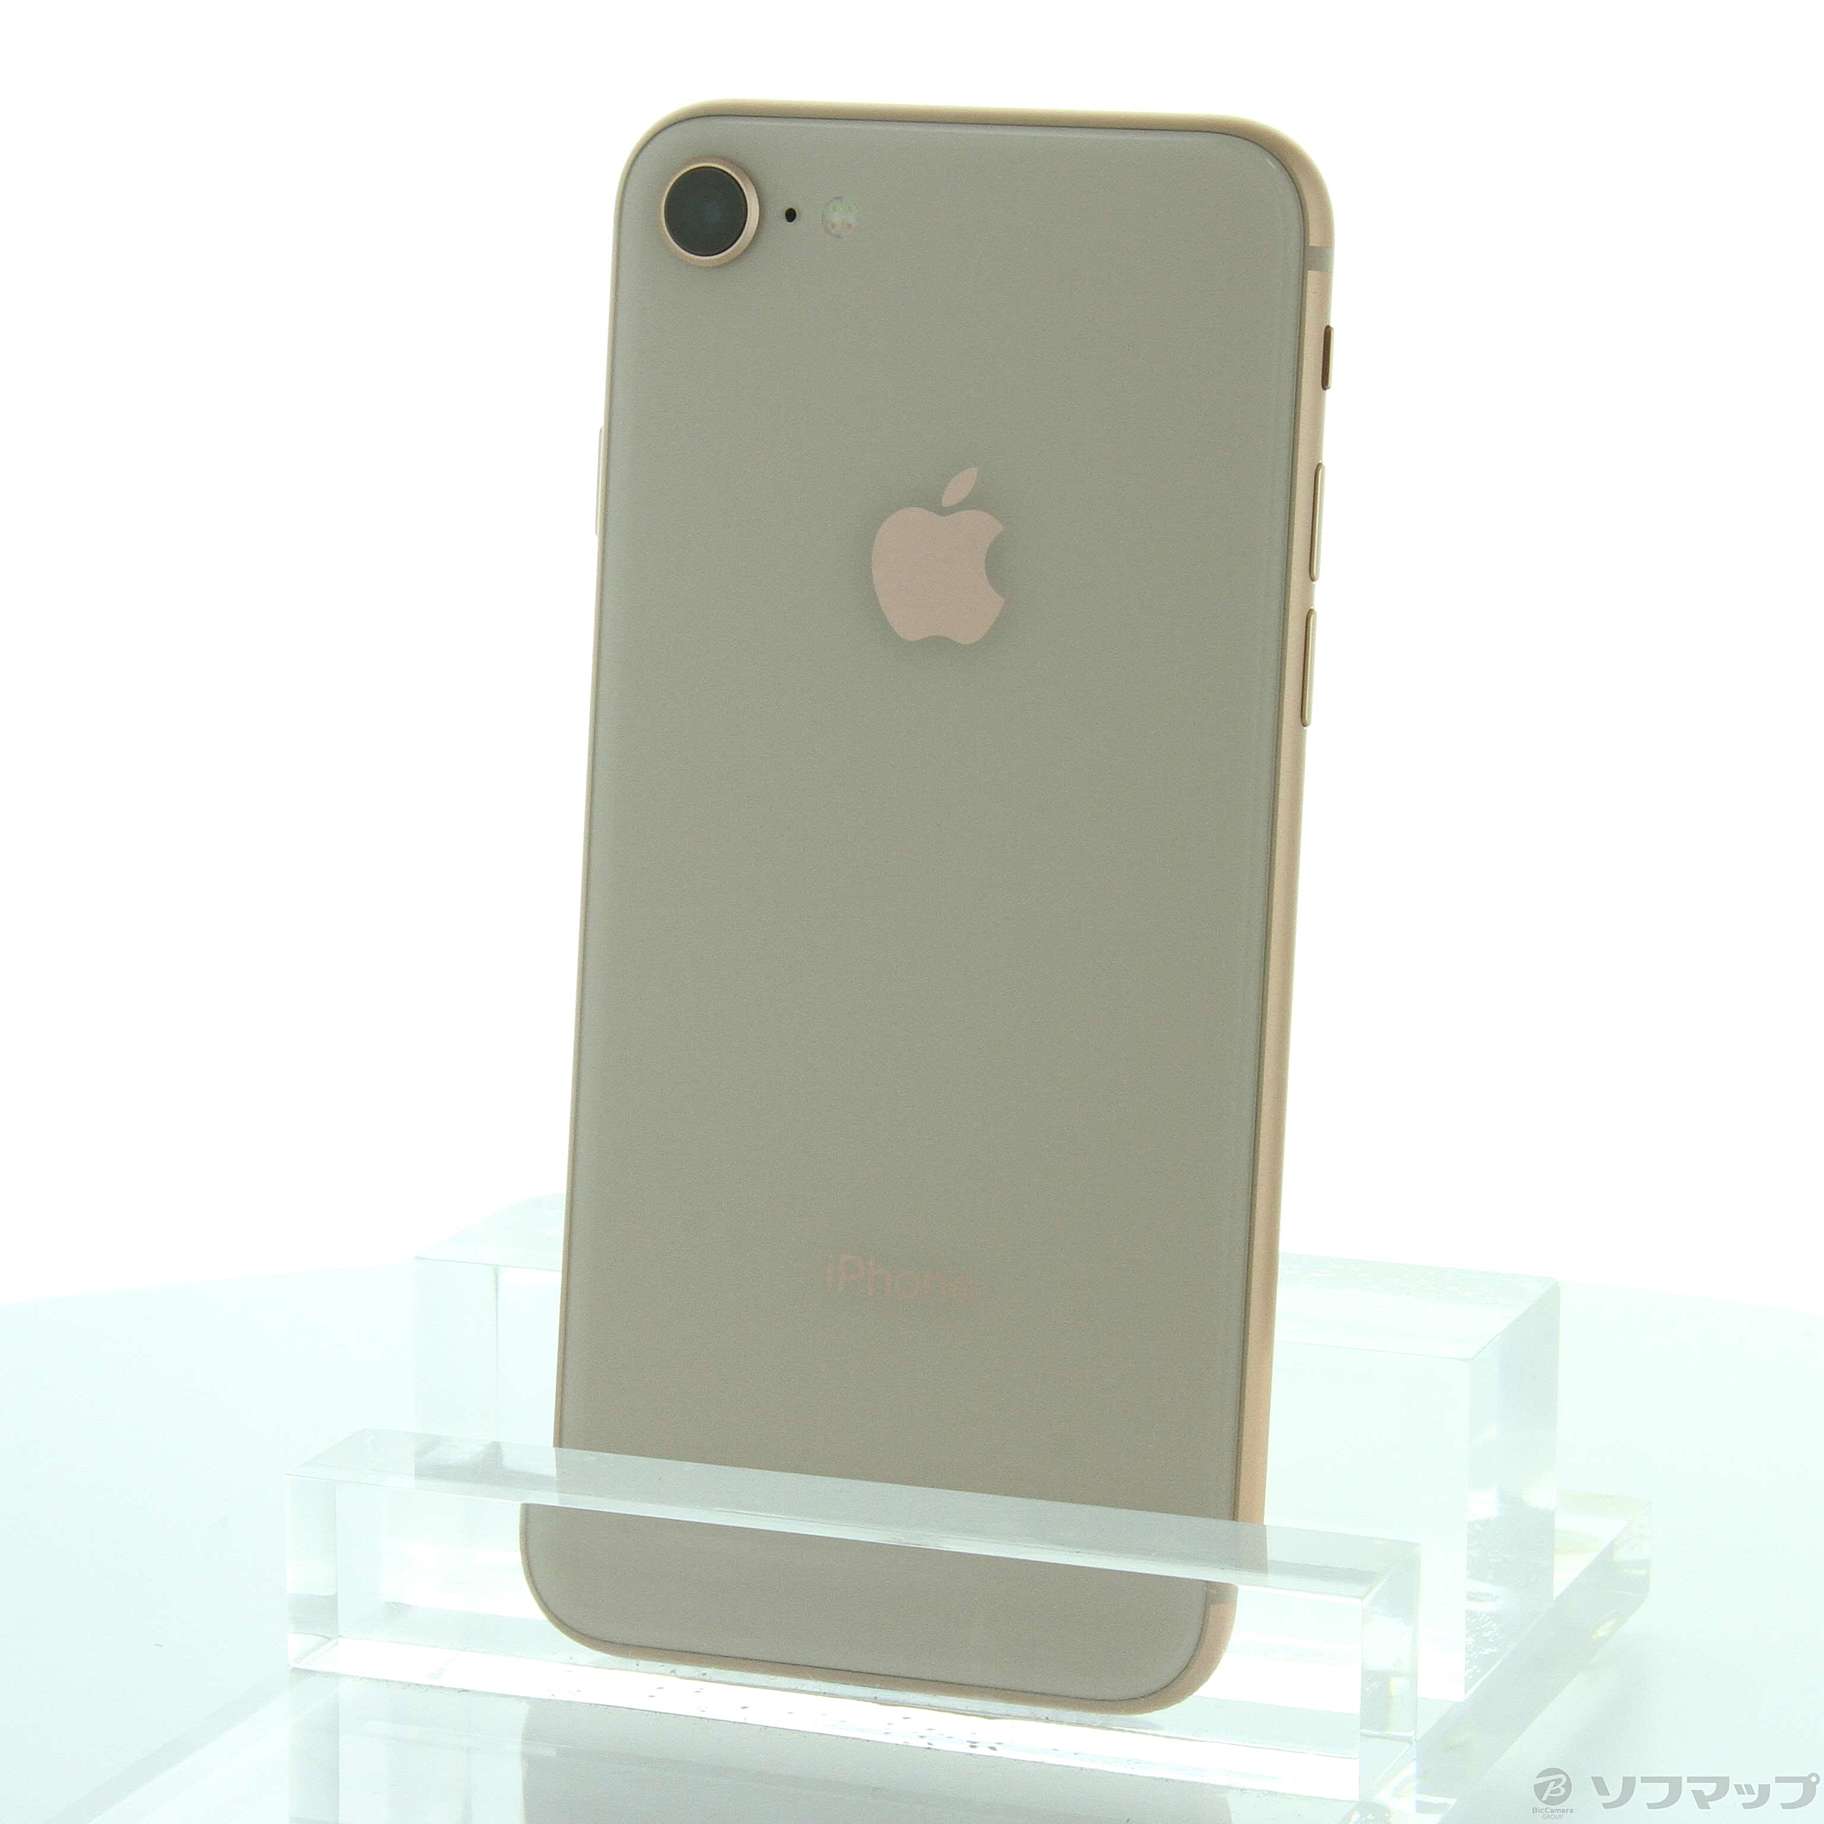 Apple アップル iPhone8 64GB ゴールド - スマートフォン本体